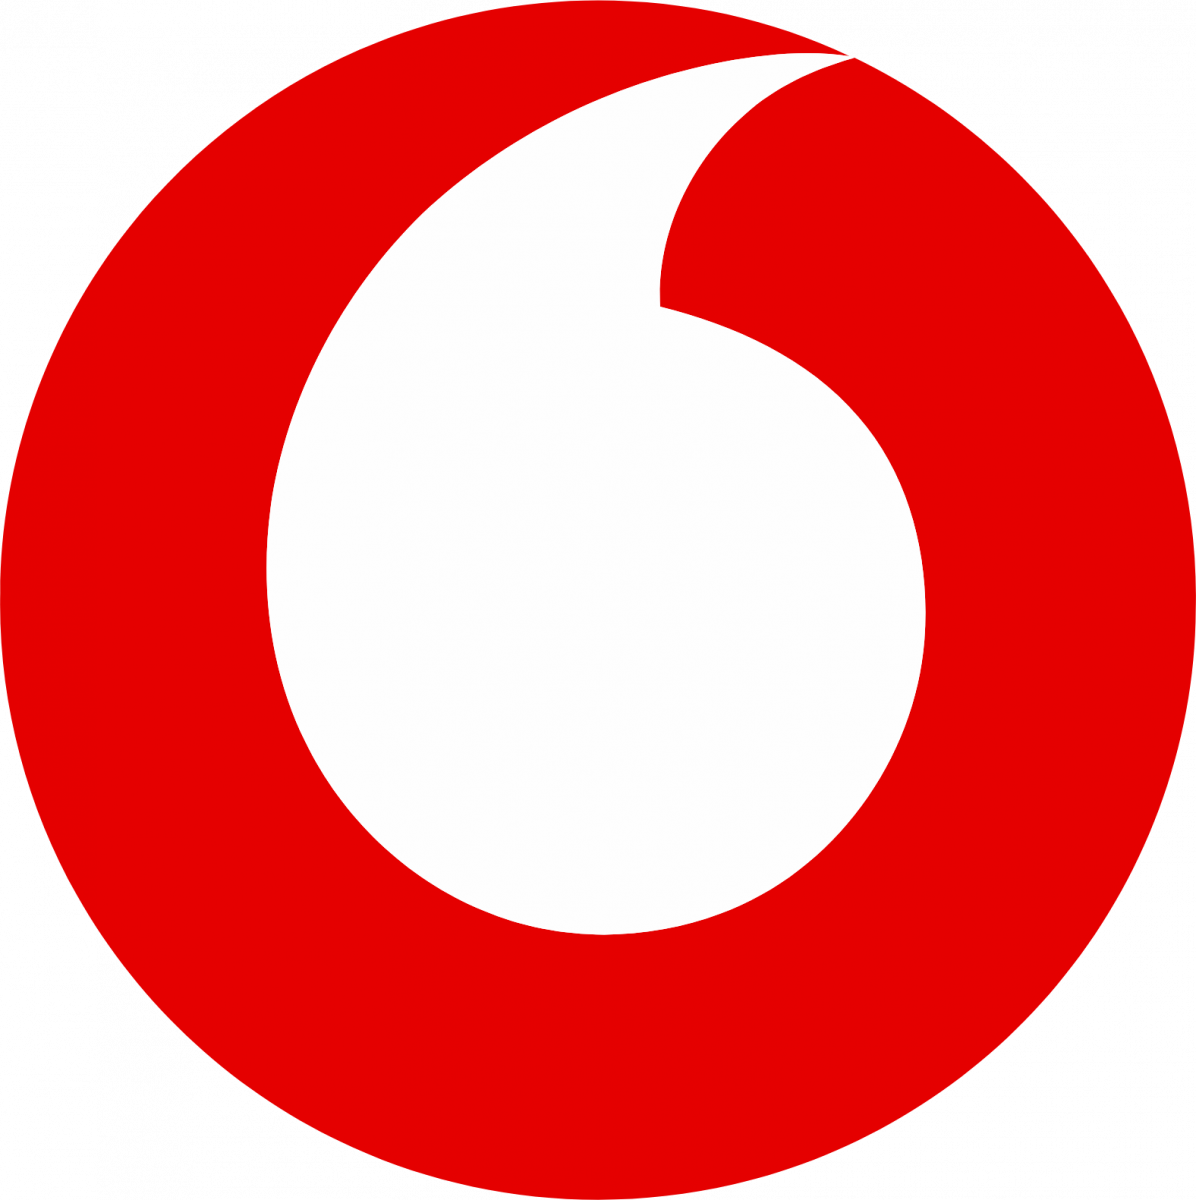 Vodafone It companies in Doha